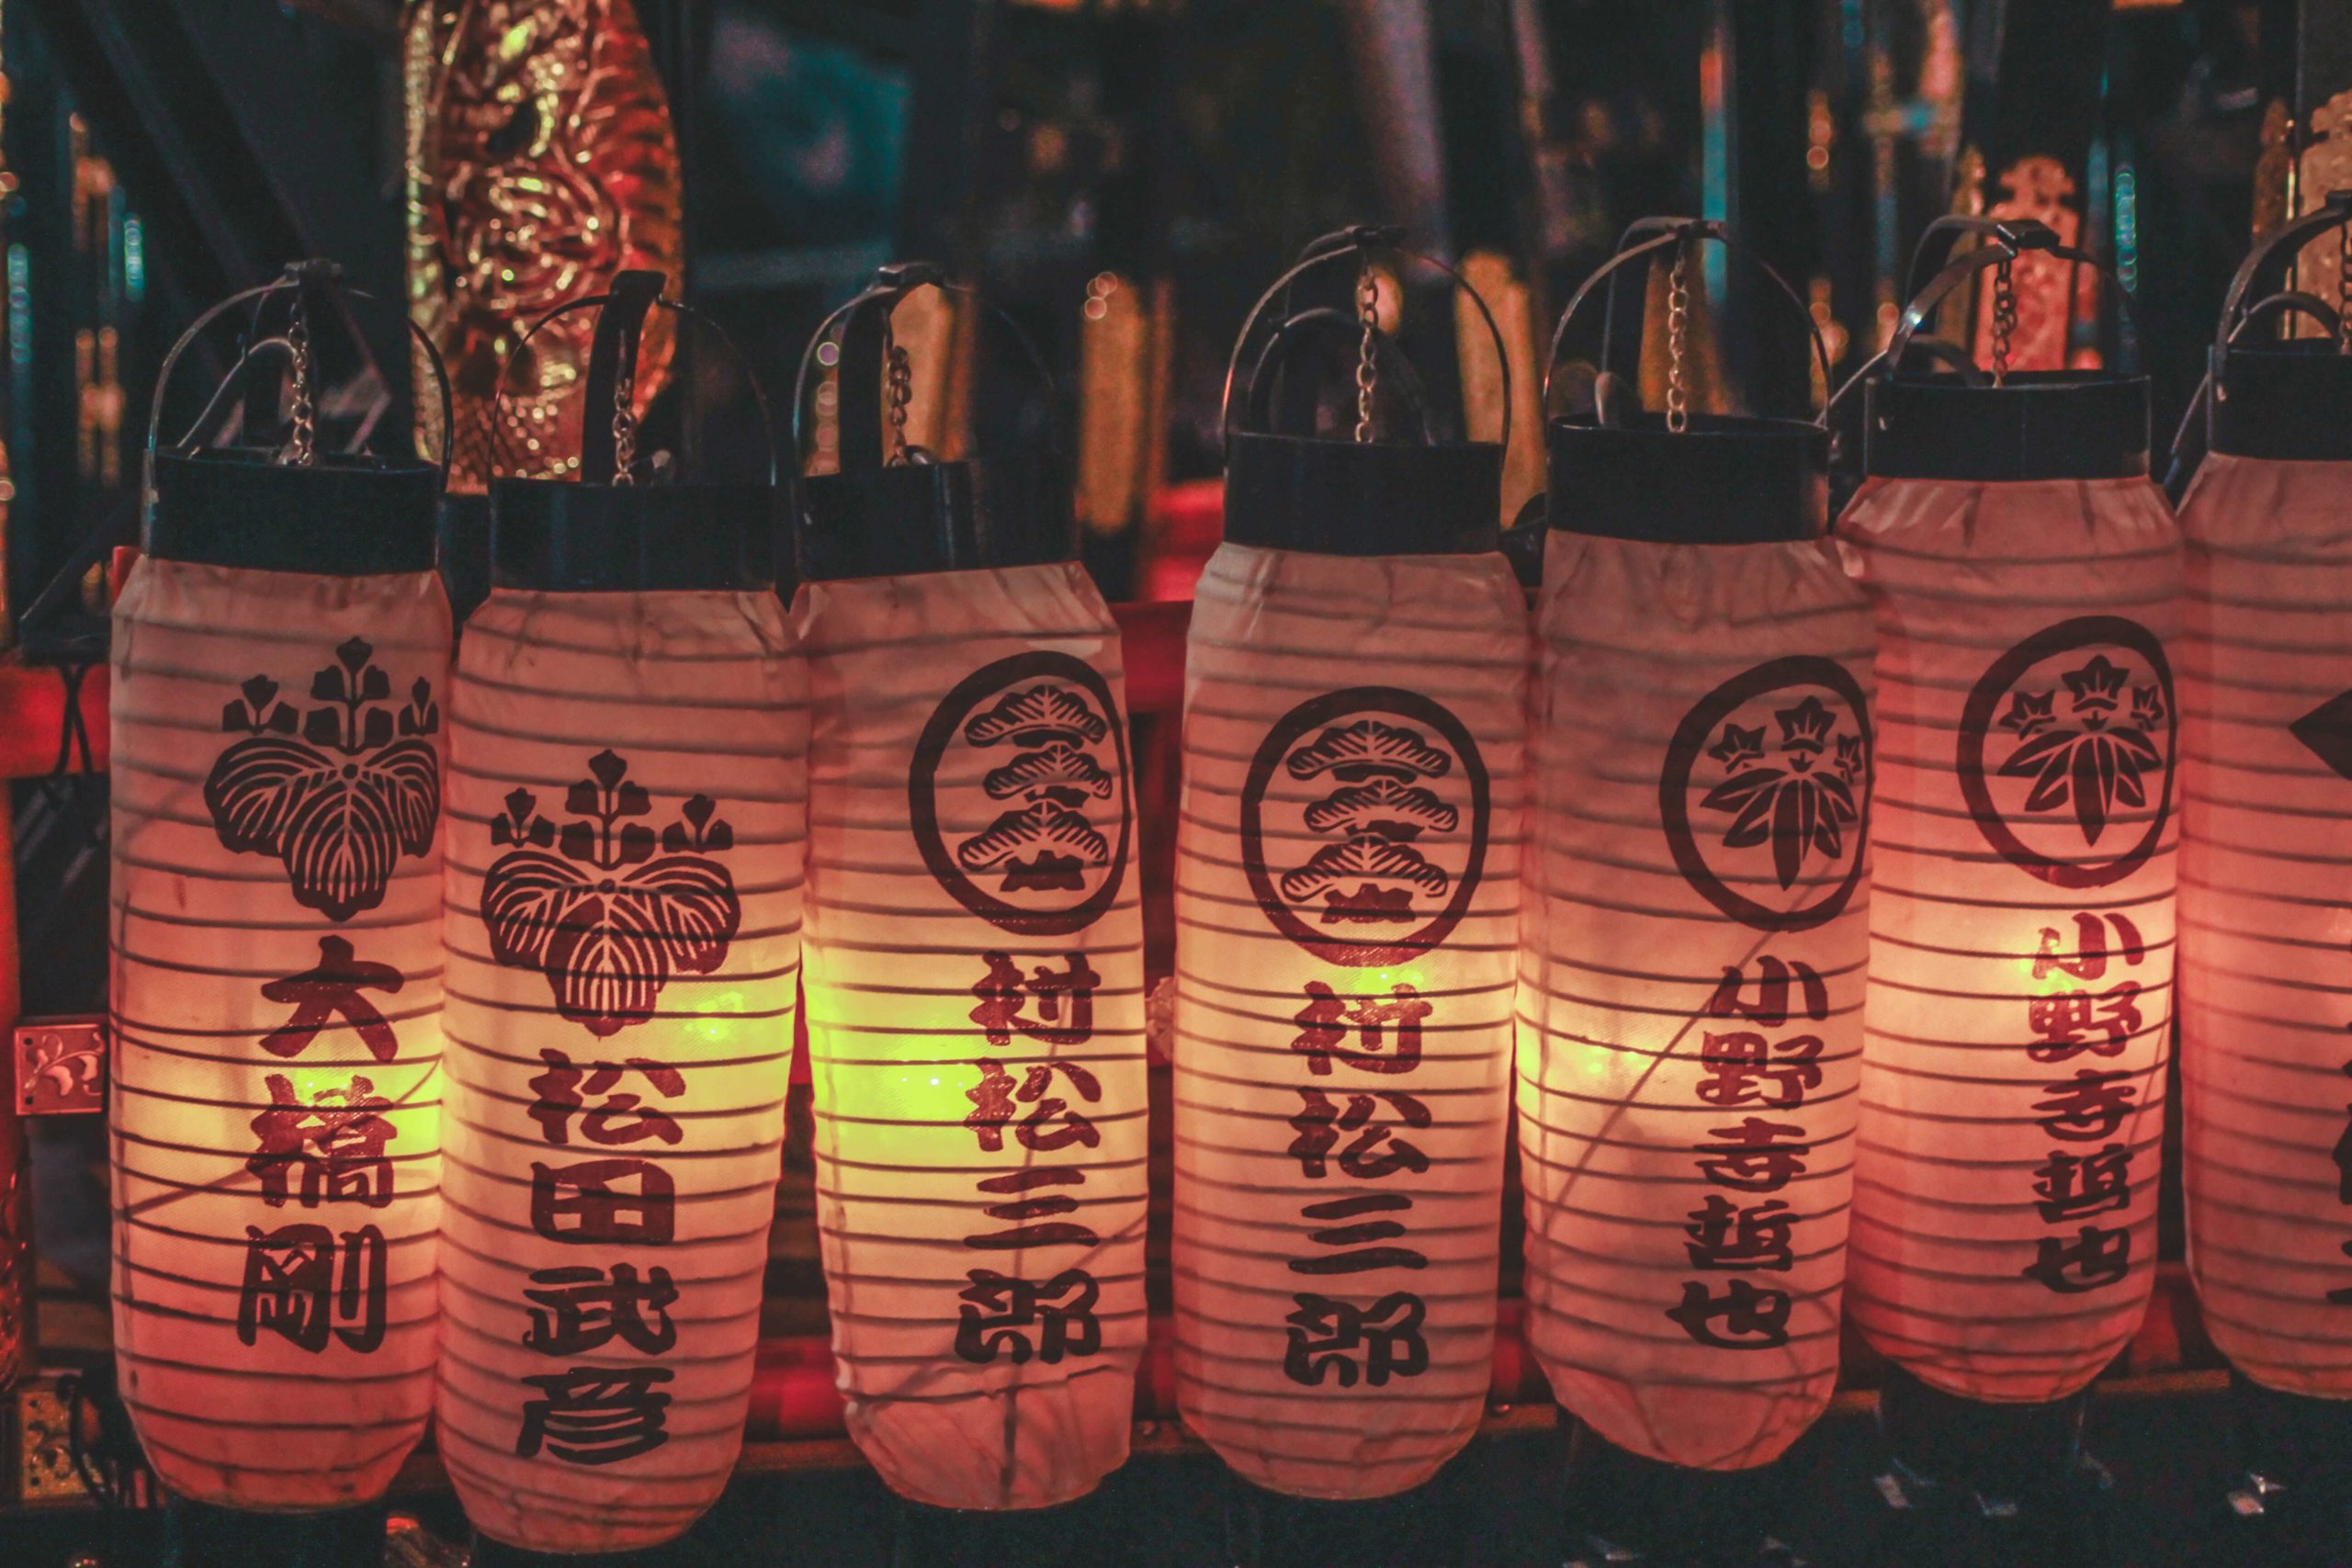 Traditional lanterns at matsuri festival in Japan